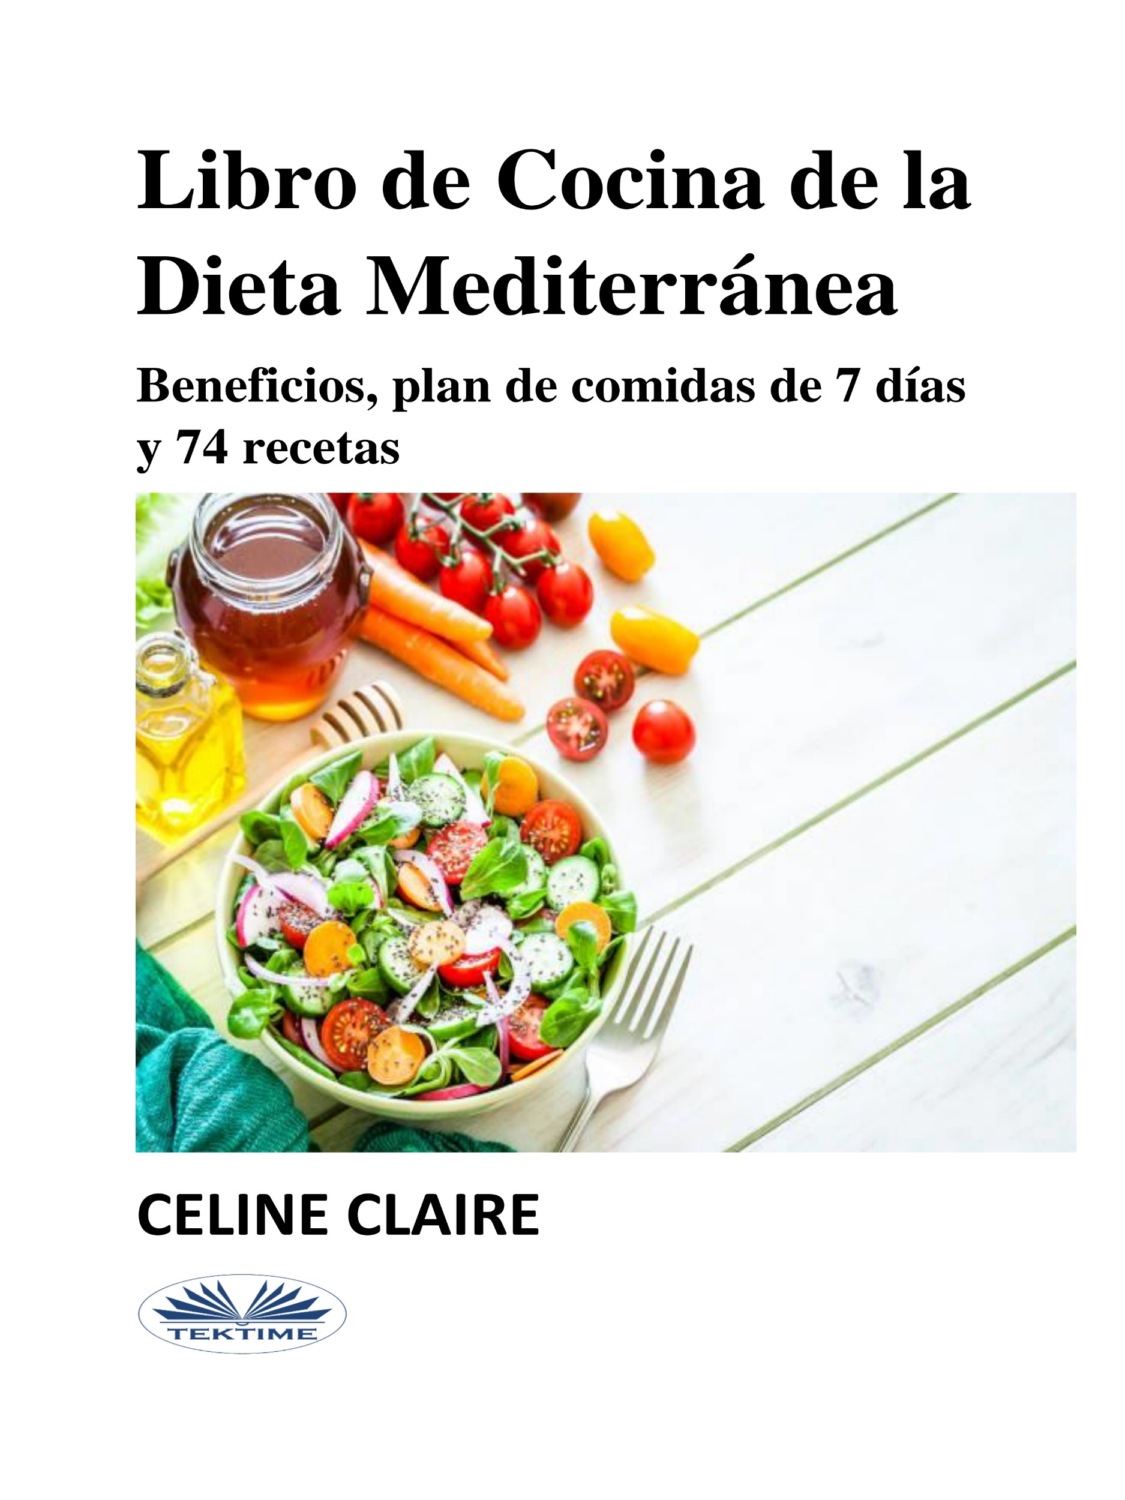 Libro De Cocina De La Dieta Mediterránea, Celine Claire – скачать книгу  fb2, epub, pdf на Литрес